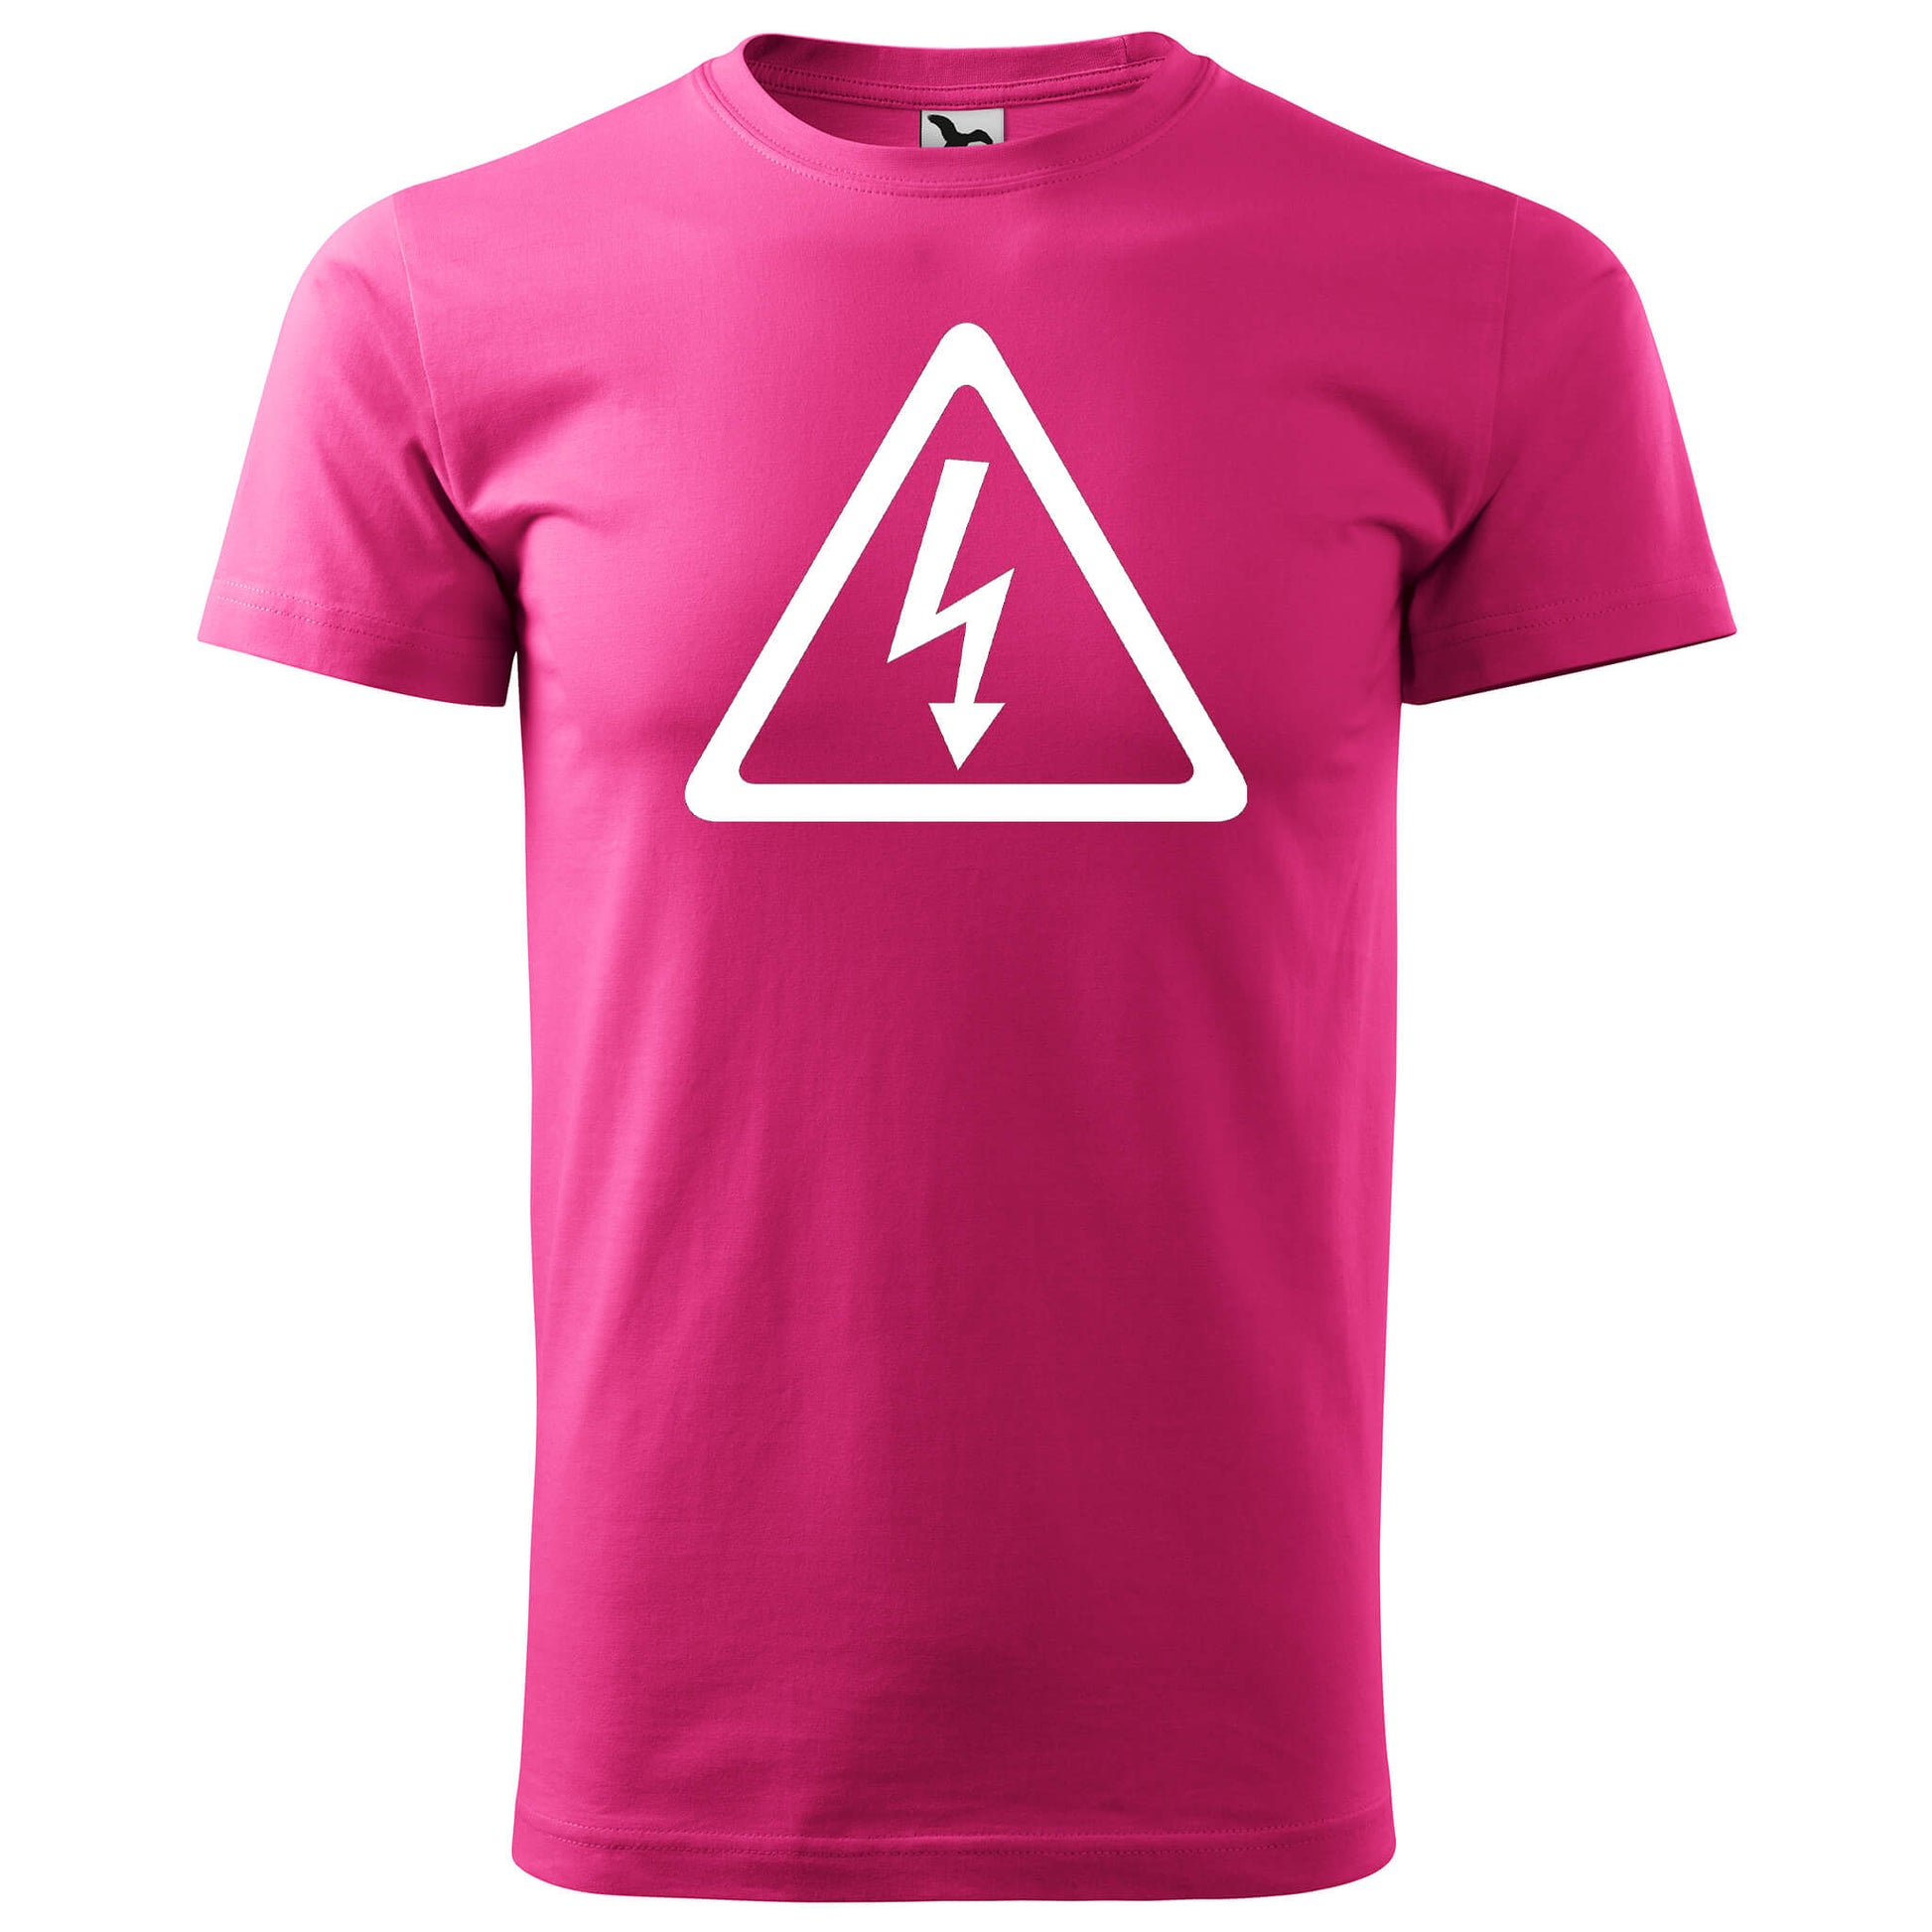 T-shirt - High voltage - rvdesignprint